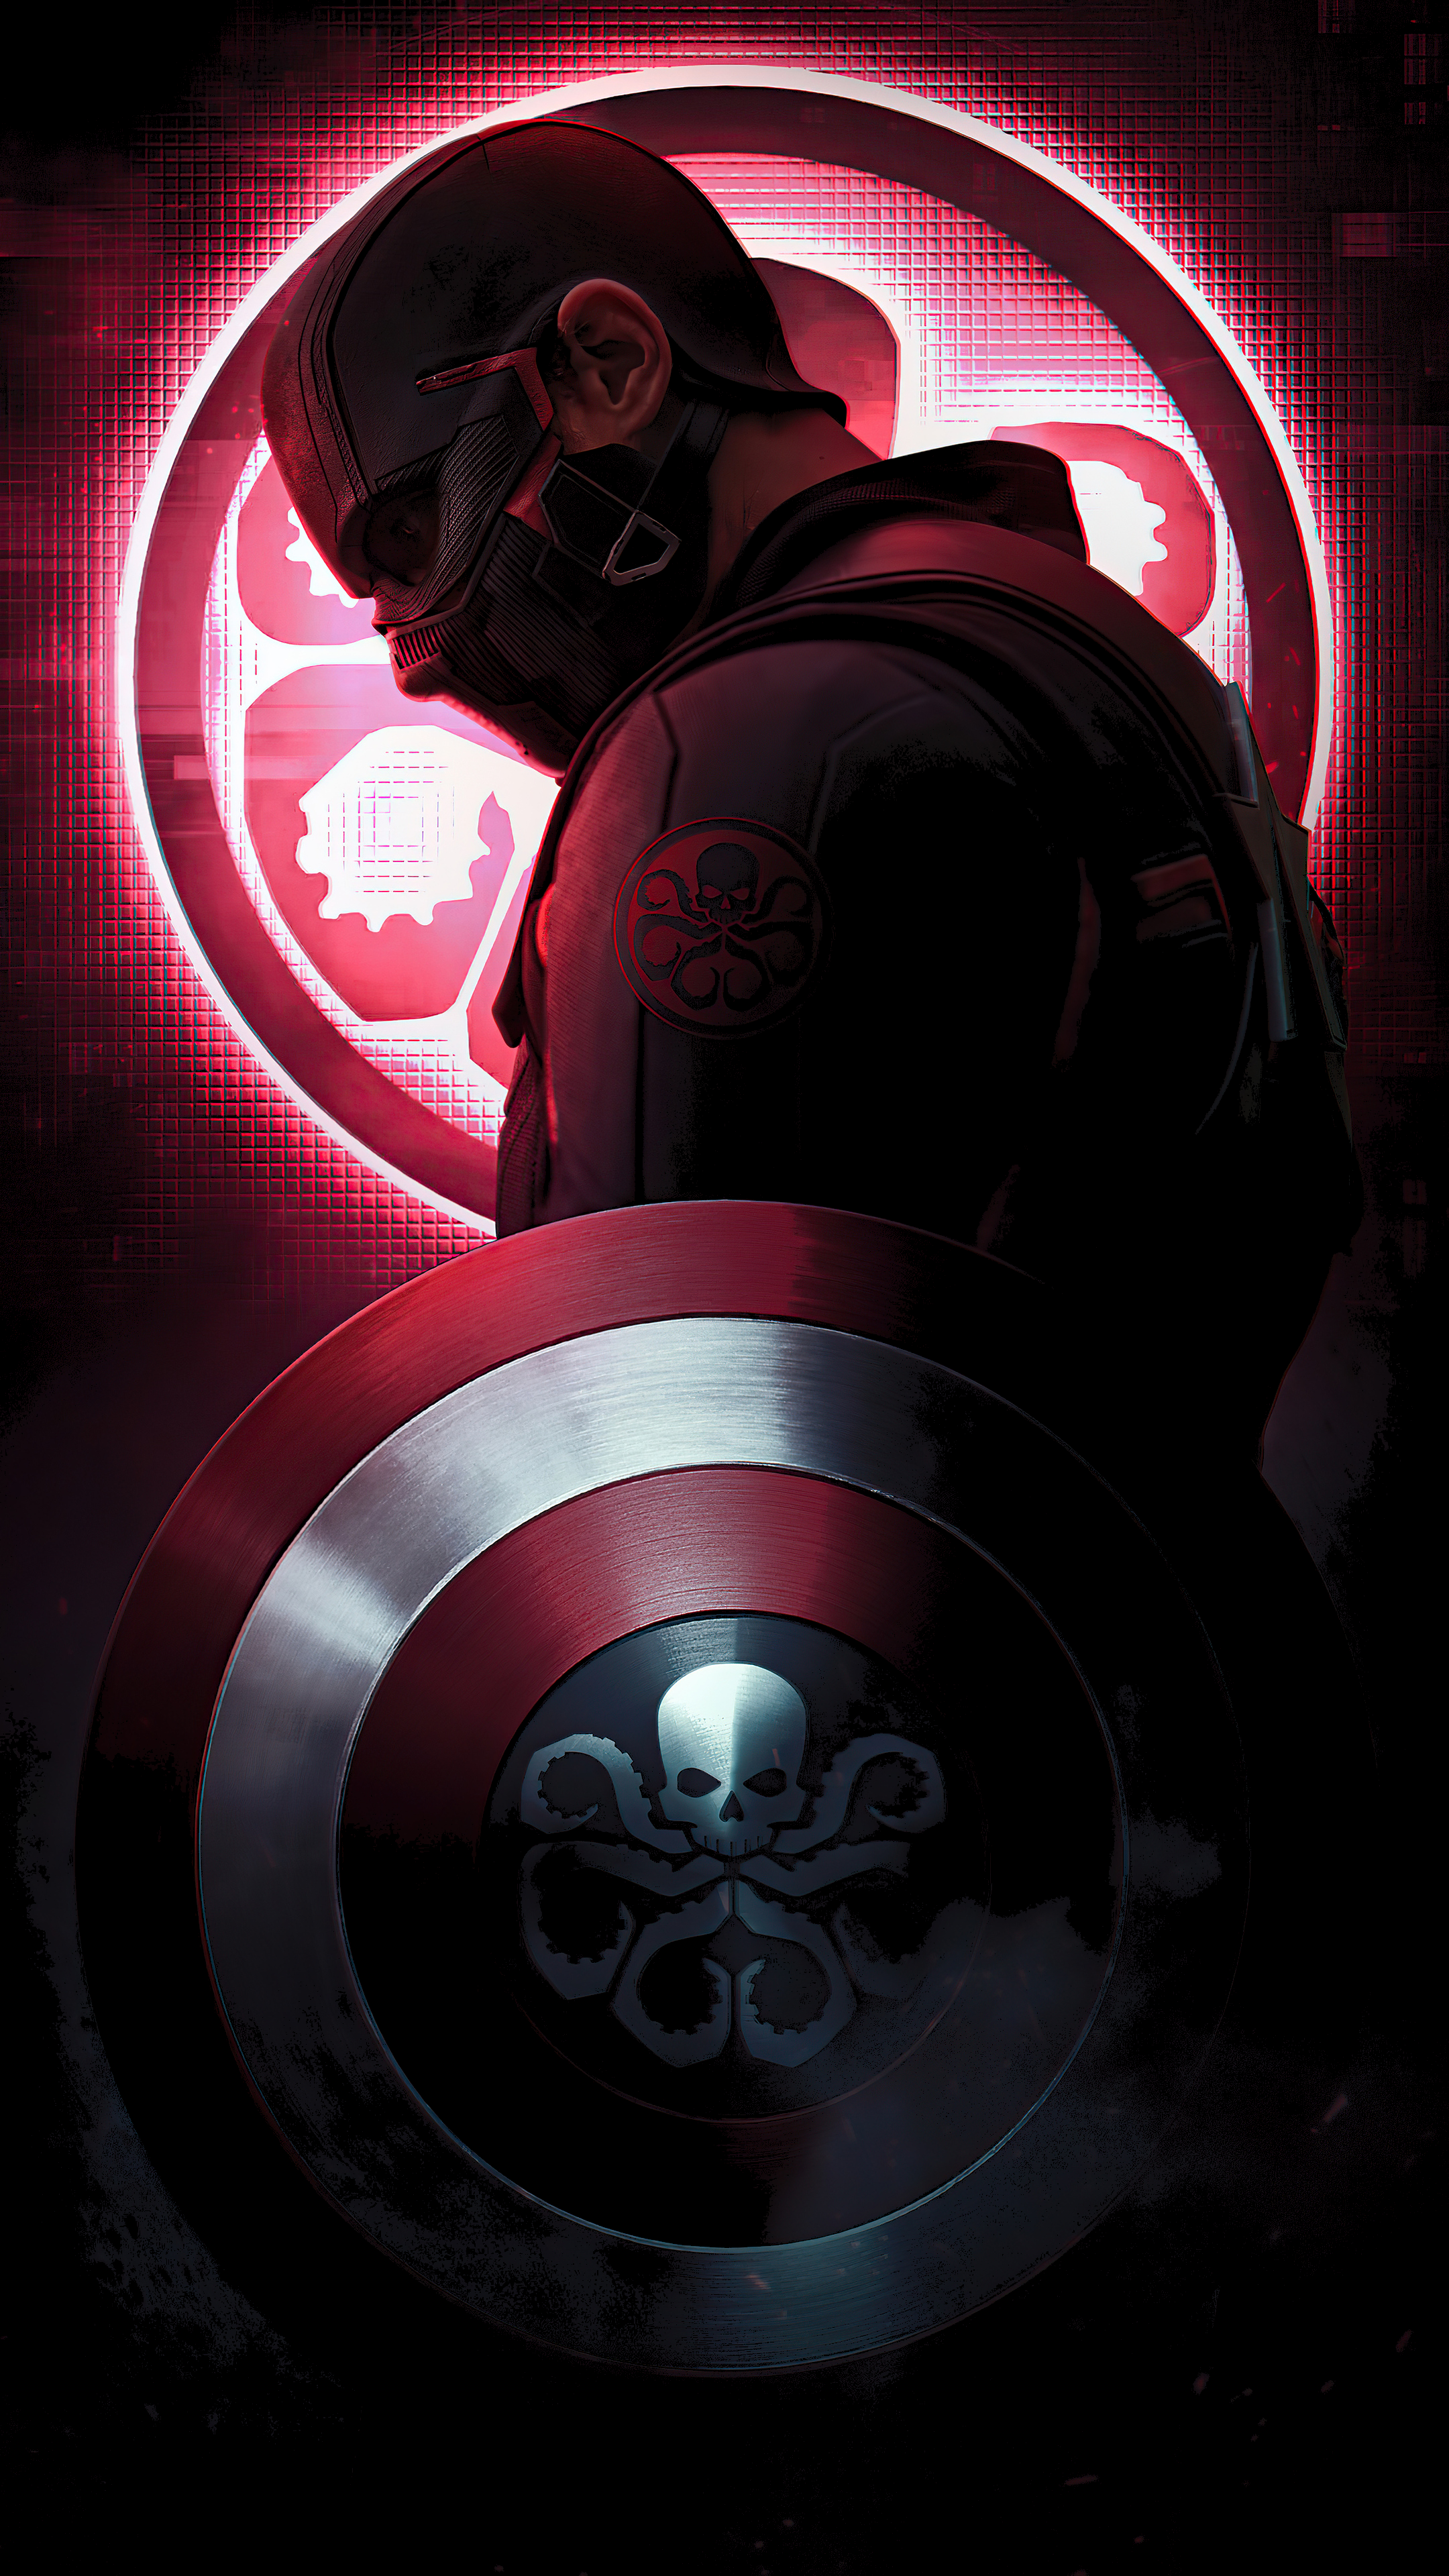 Chris Evans as Captain America 4K Wallpapers | HD Wallpapers | ID #28200